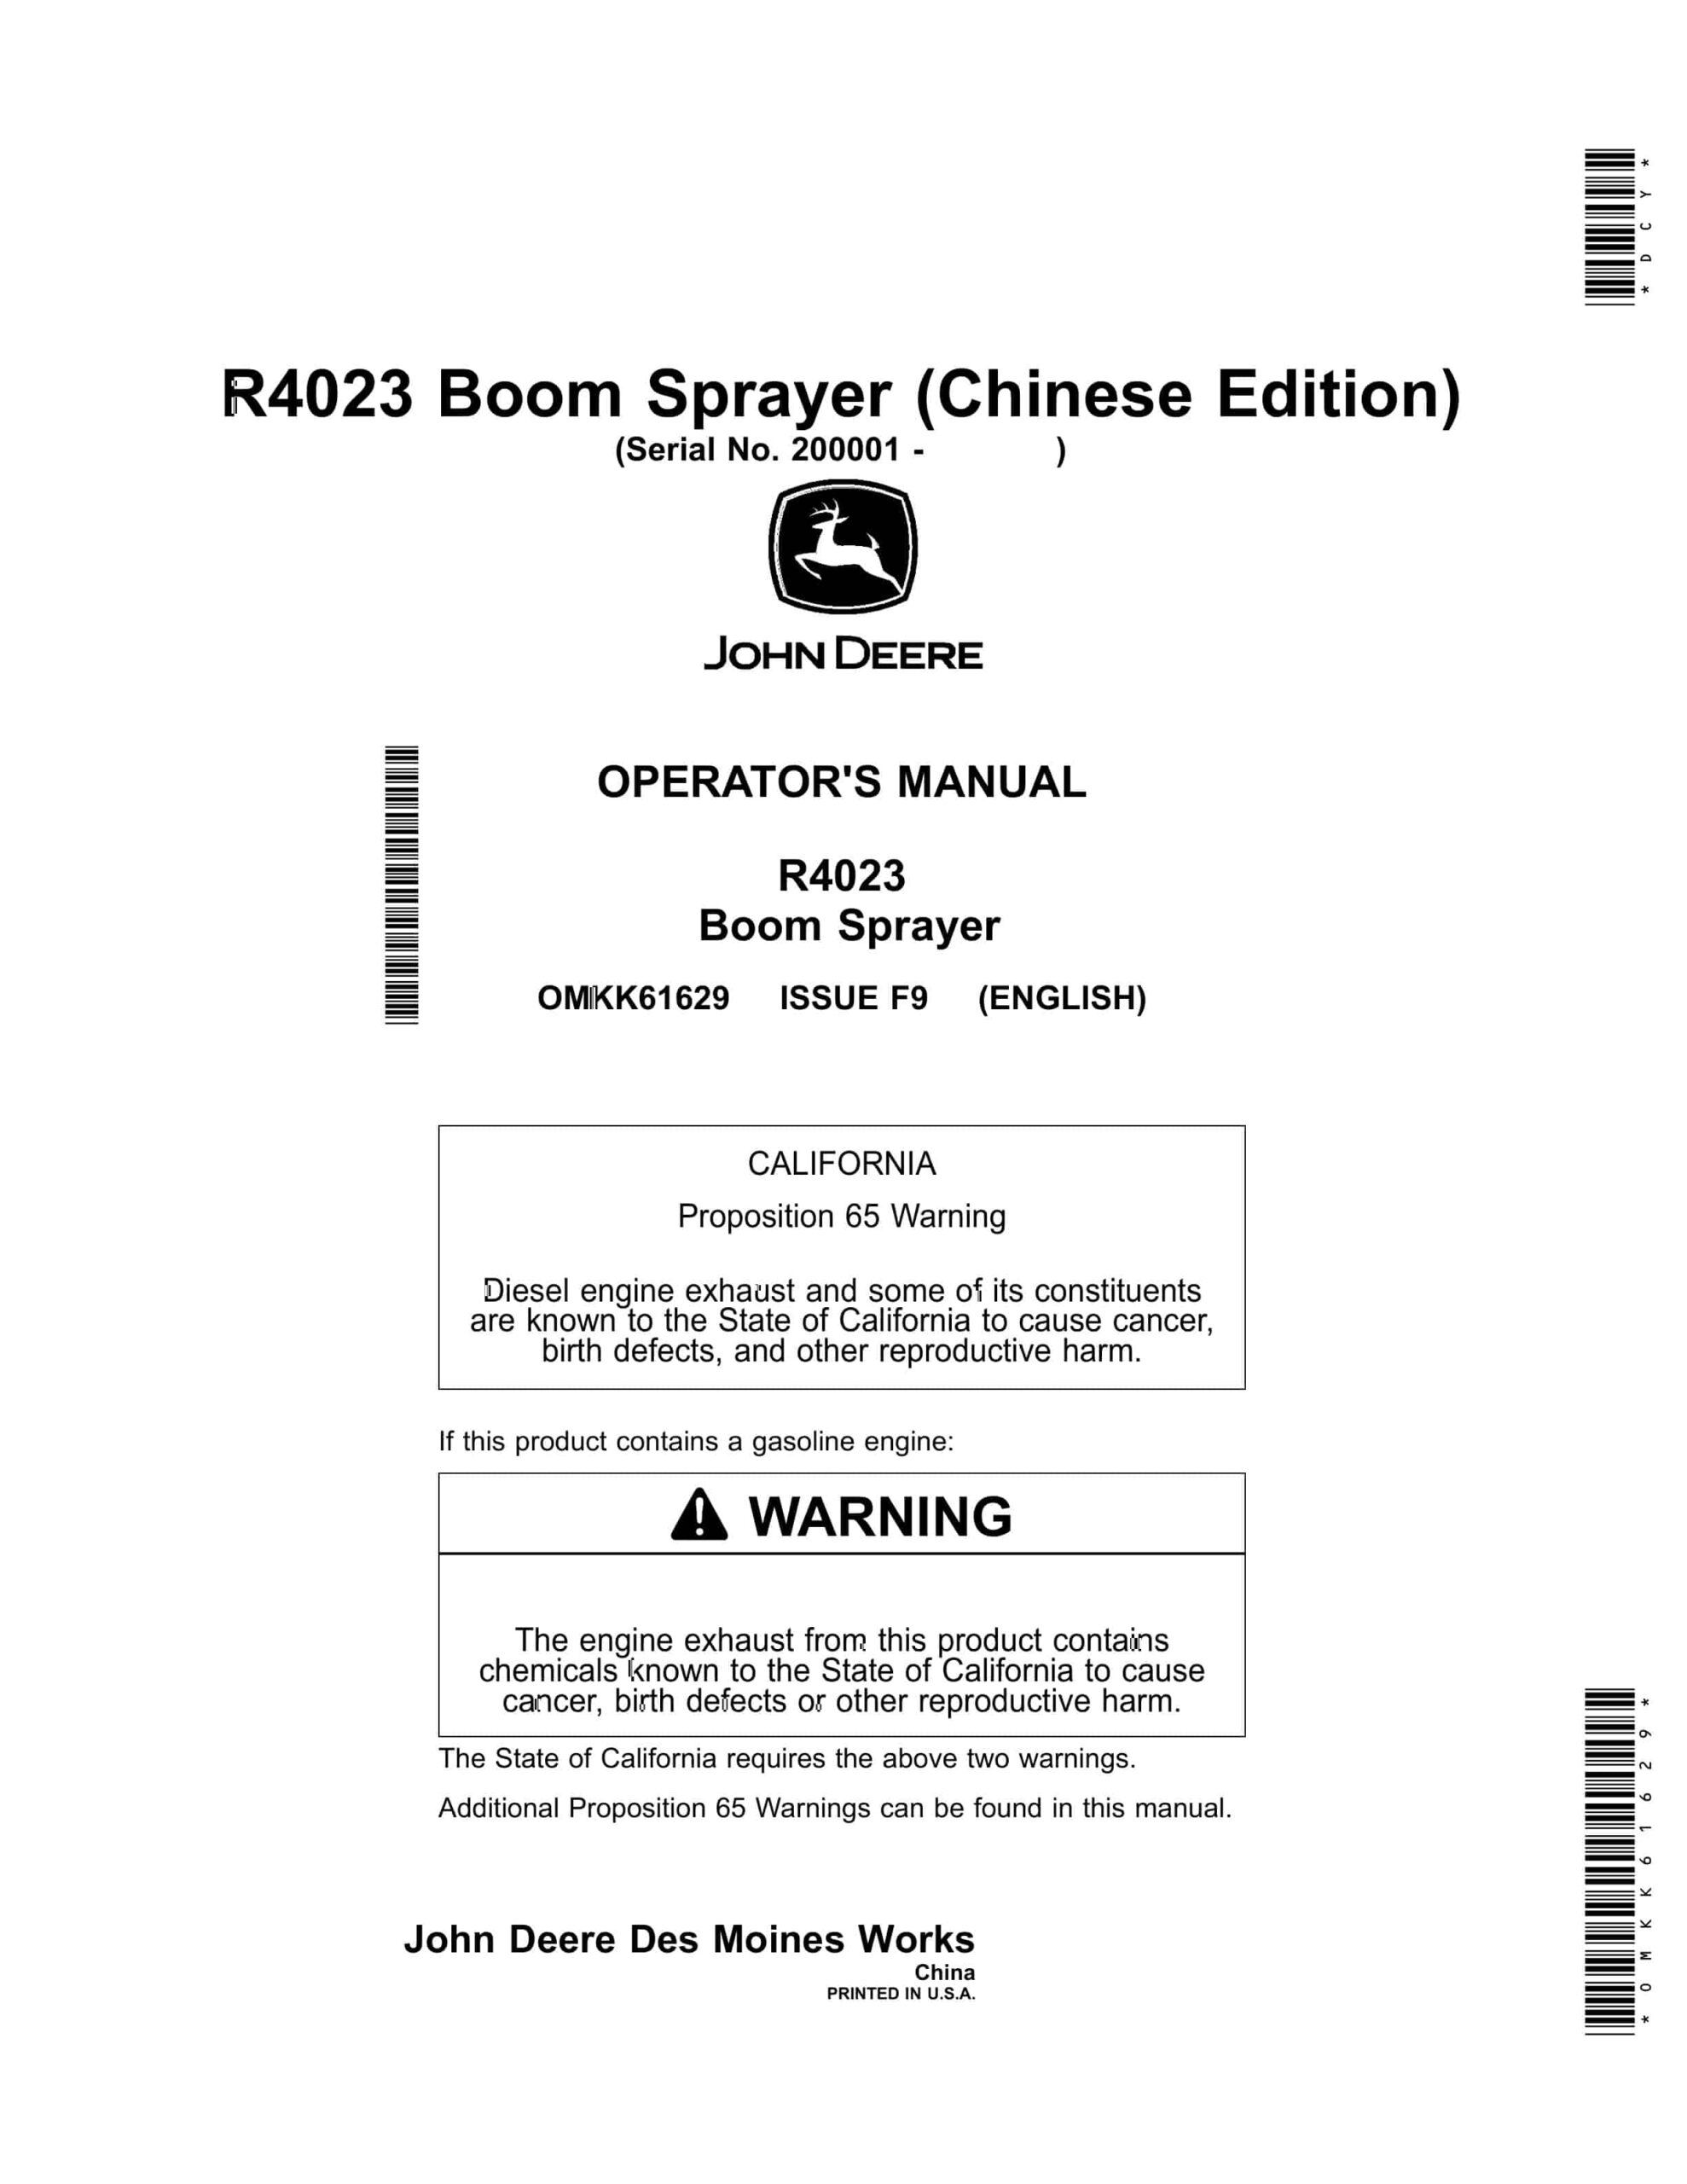 John Deere R4023 Boom Sprayer Operator Manual OMKK61629-1